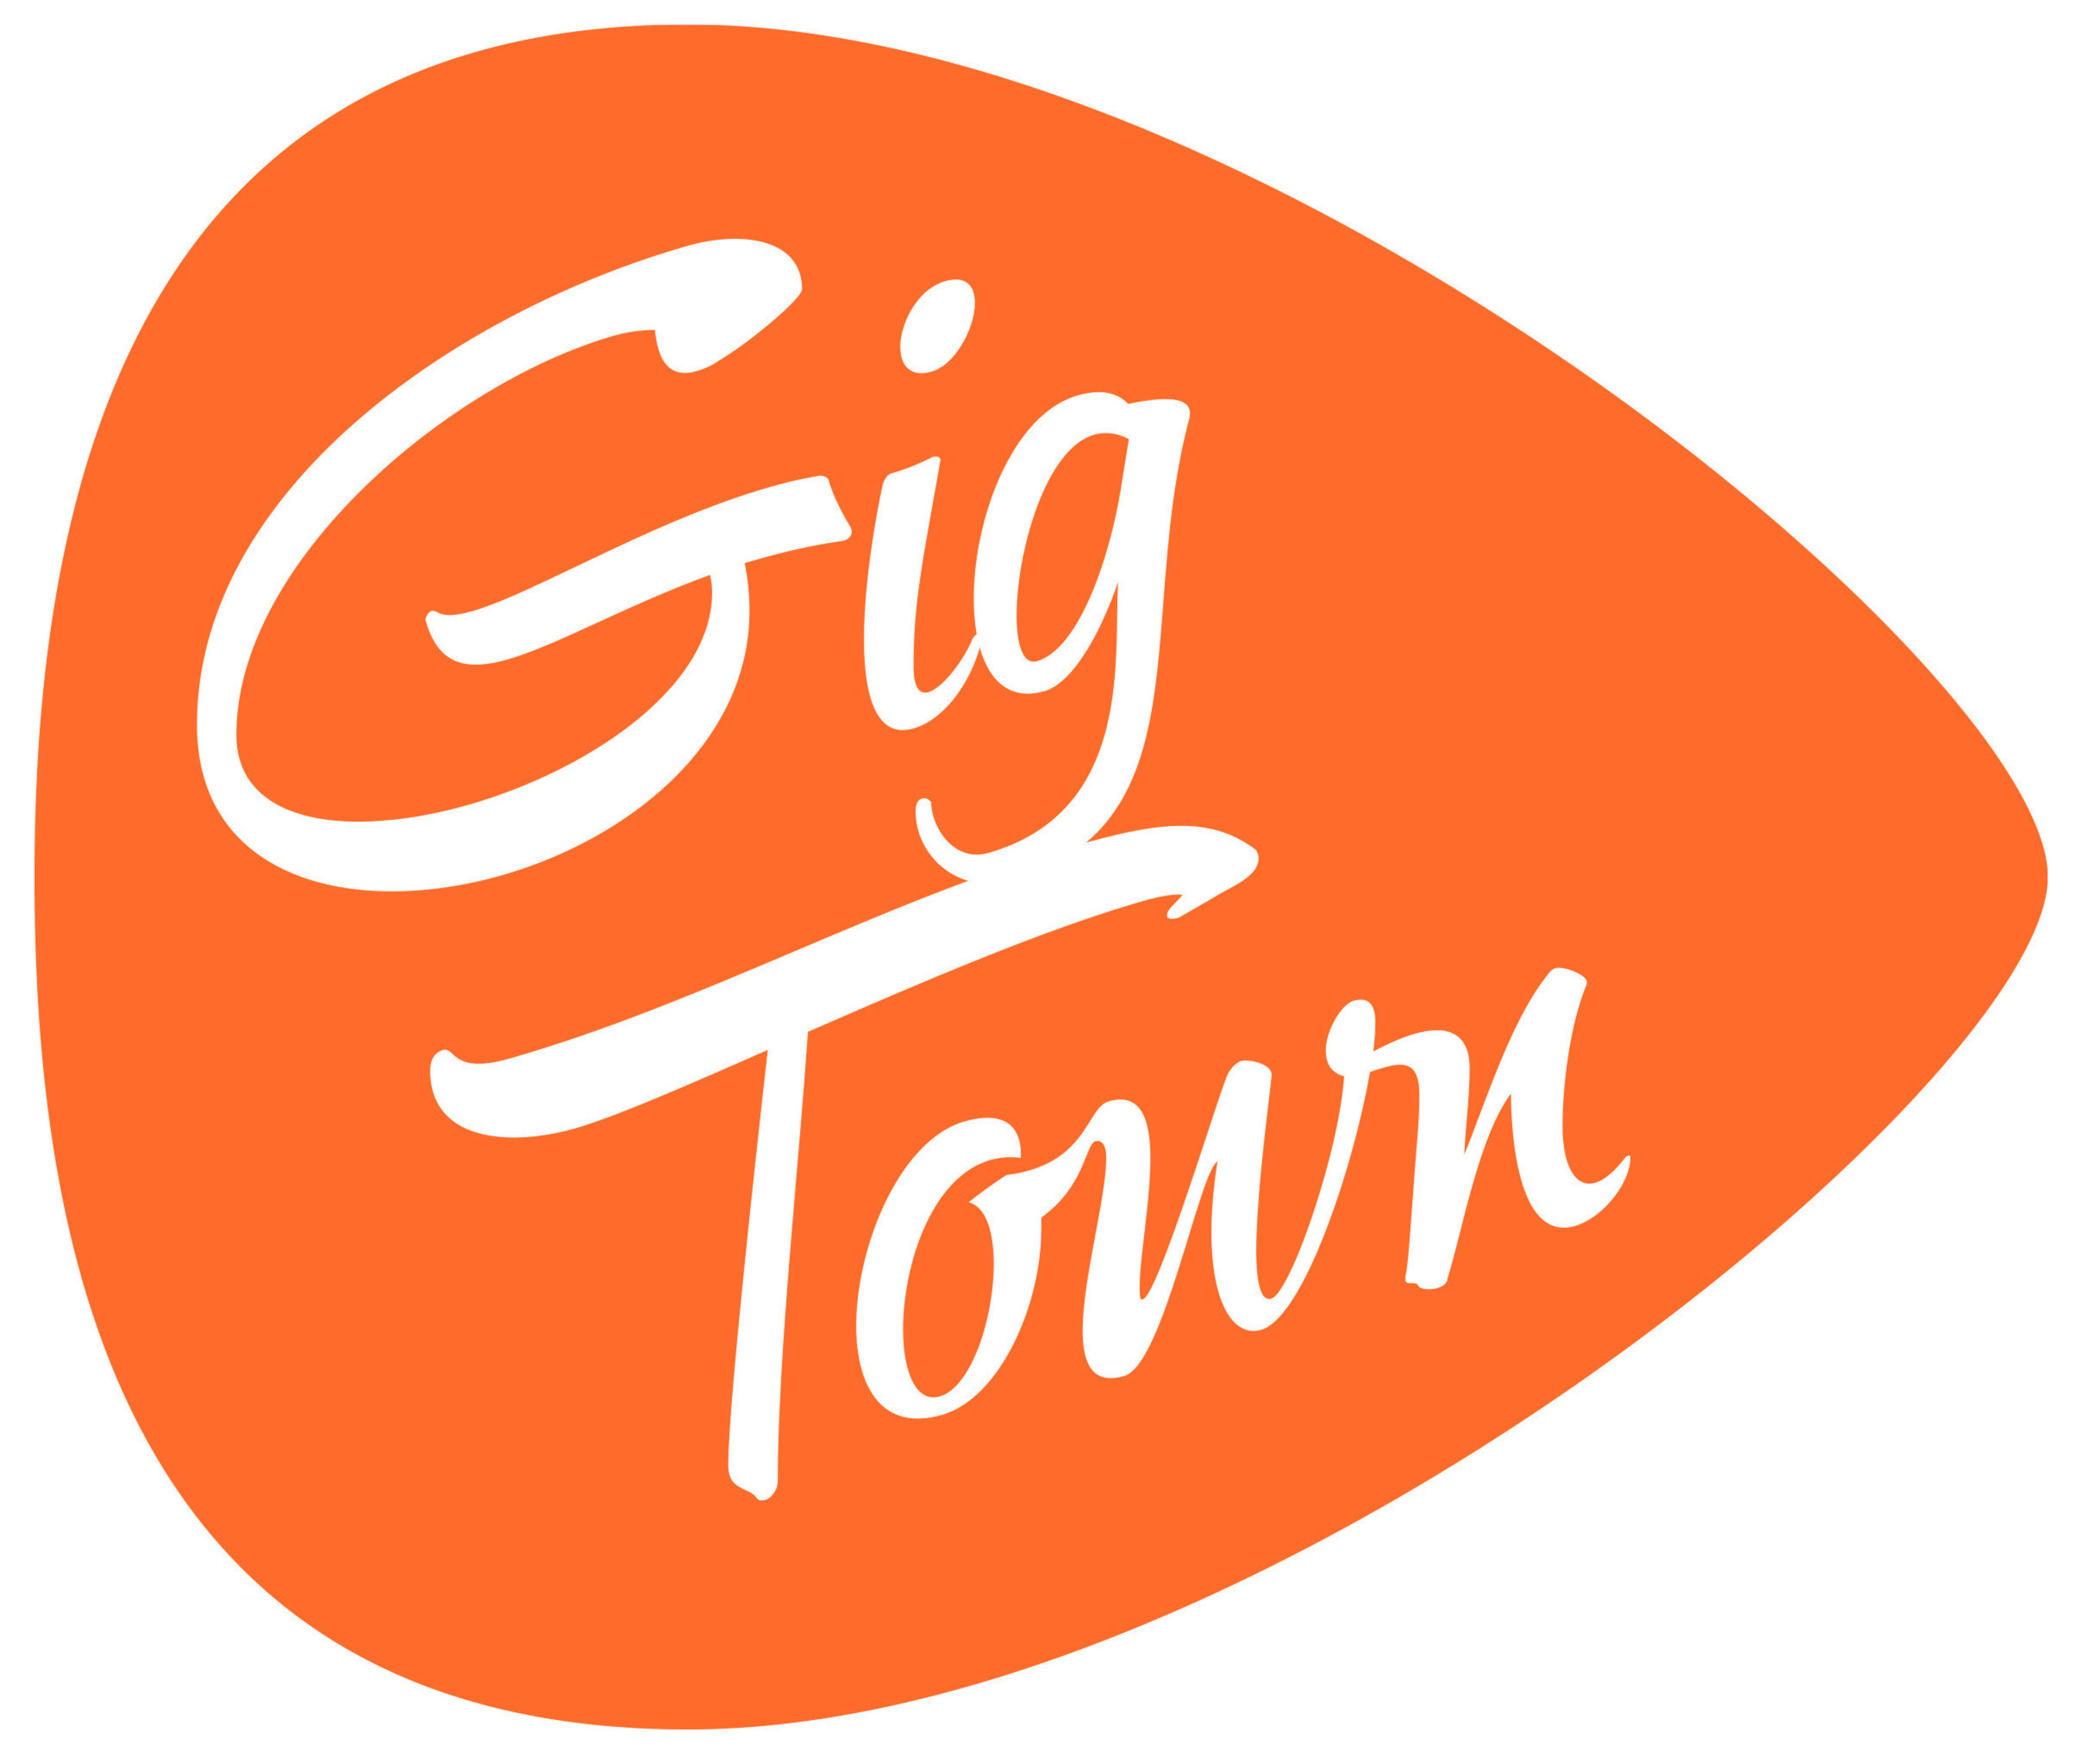 GigTown, LLC based in San Diego, California